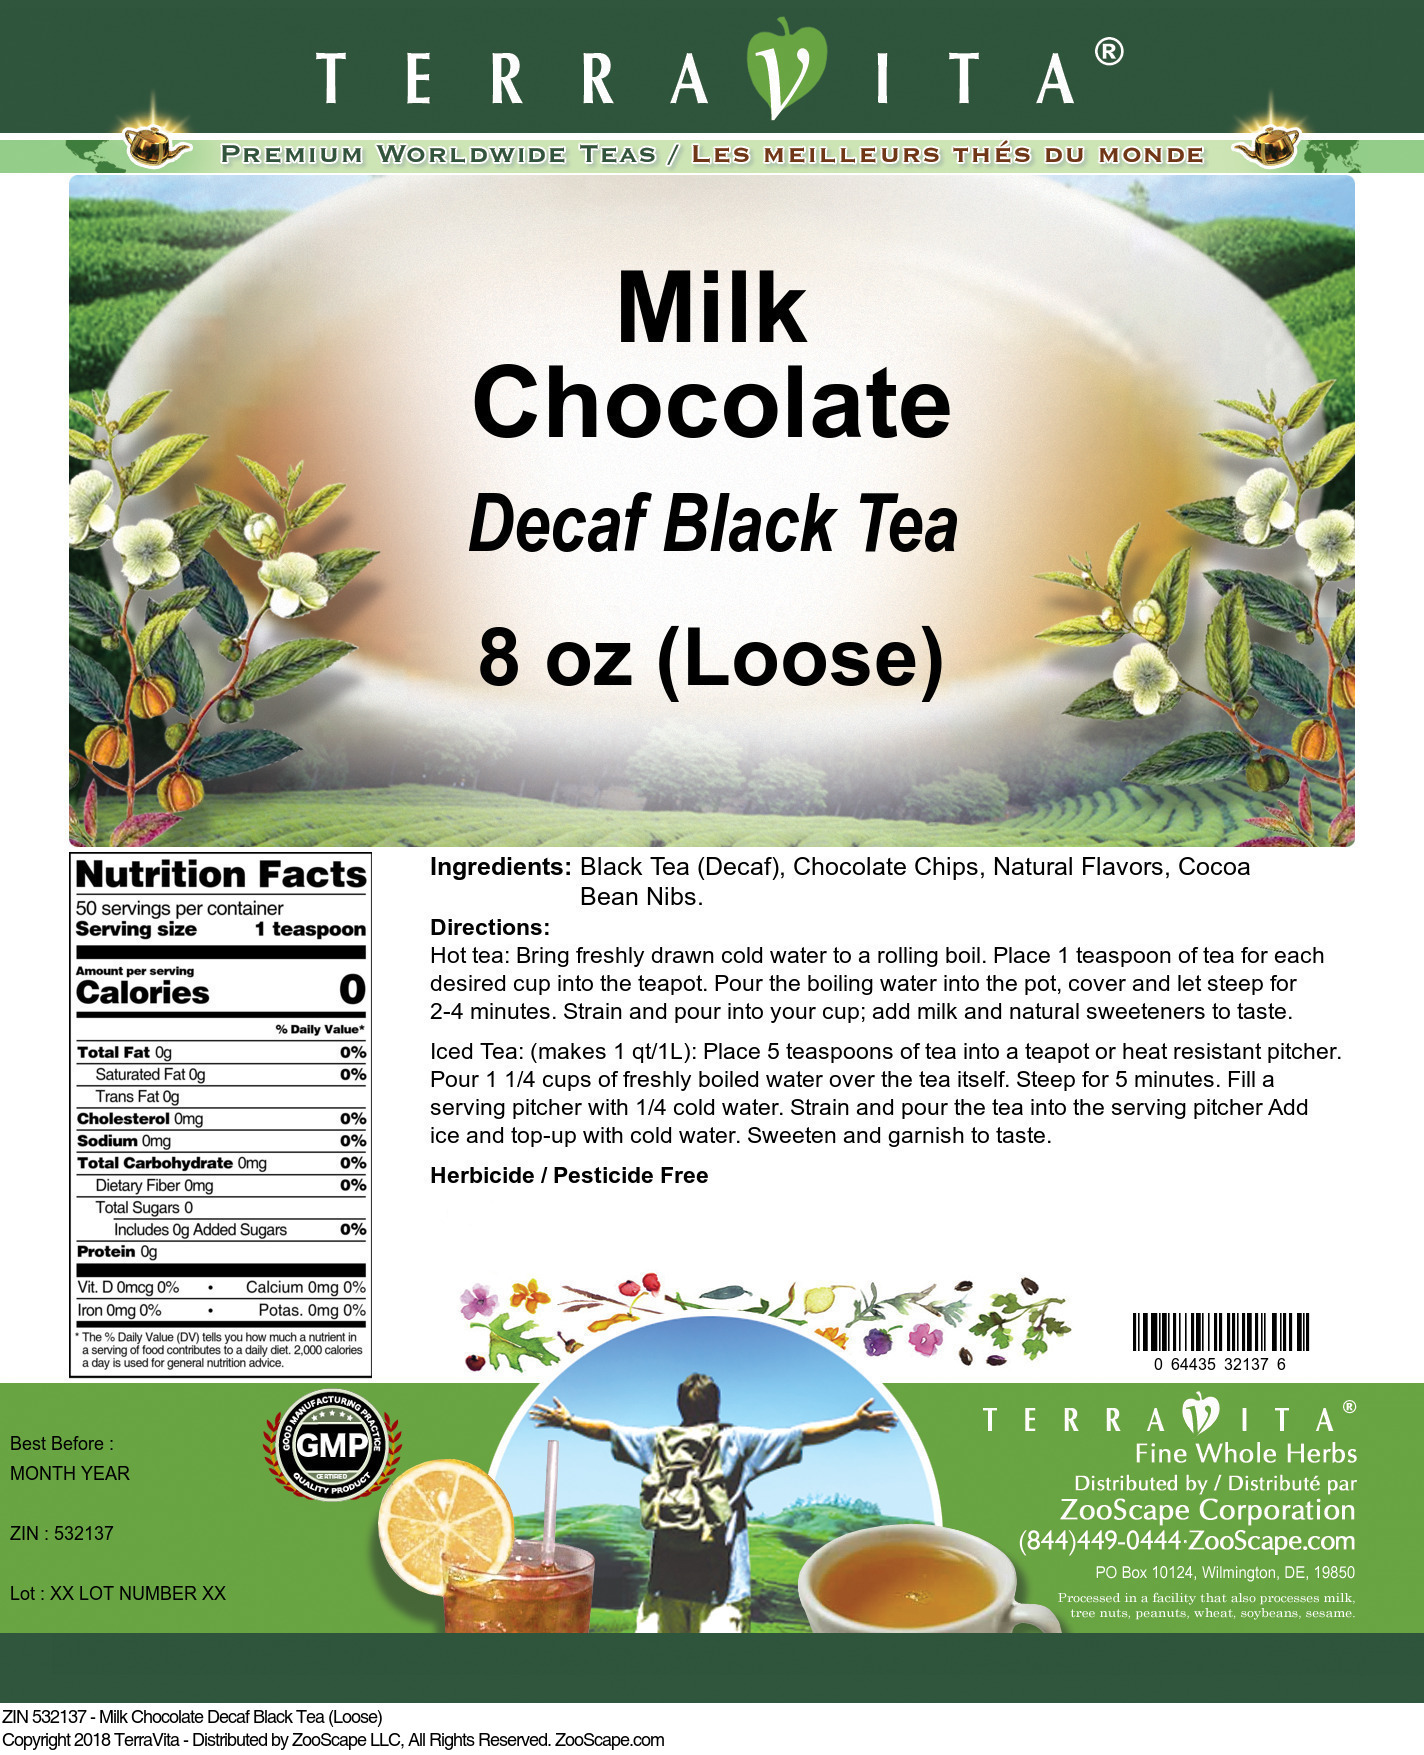 Milk Chocolate Decaf Black Tea (Loose) - Label